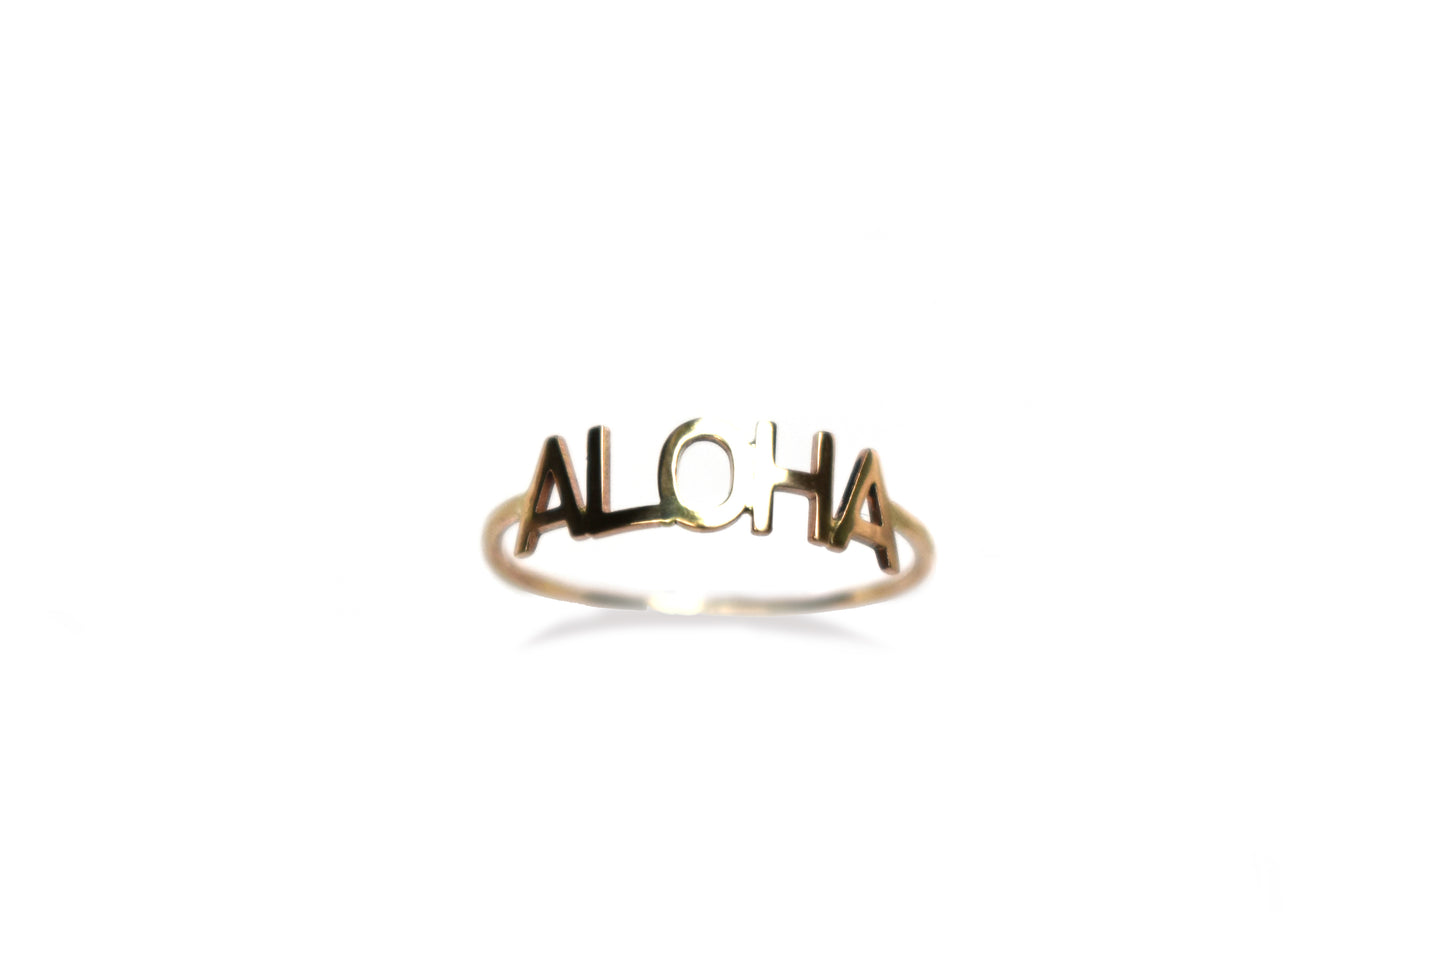 Aloha ring